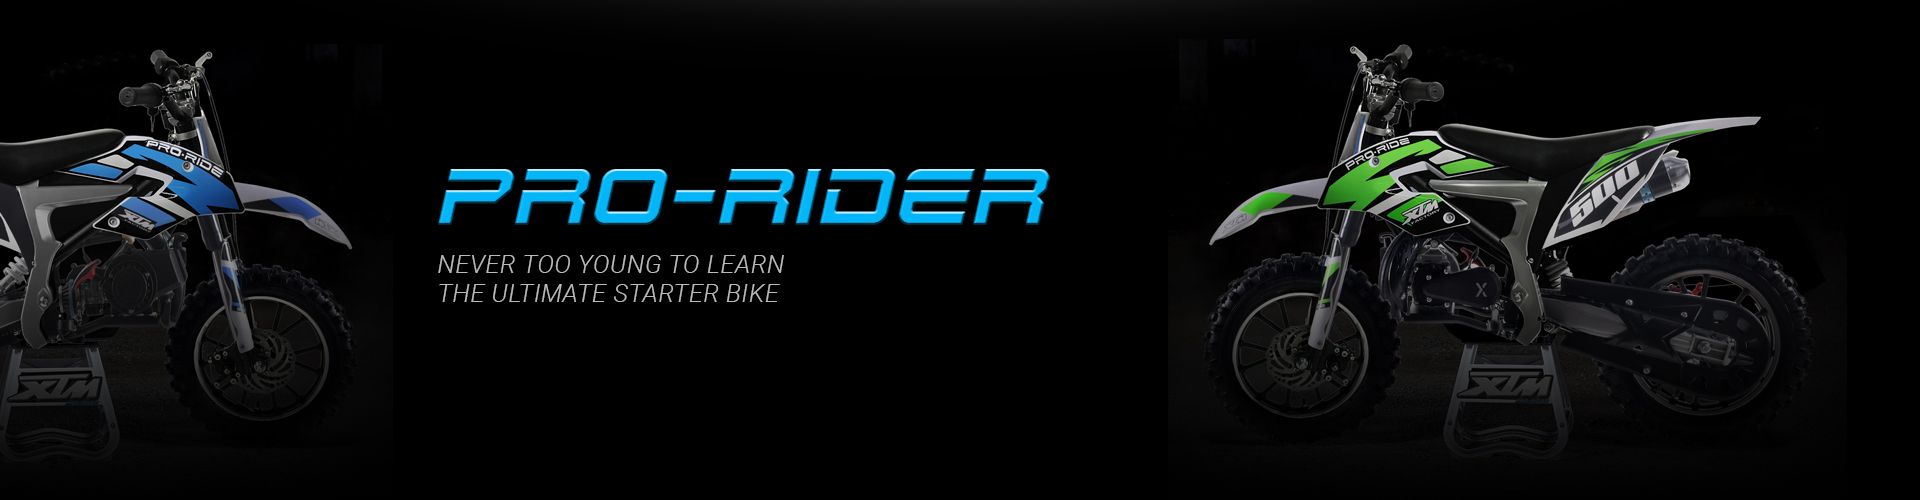 Pro-Rider 50cc